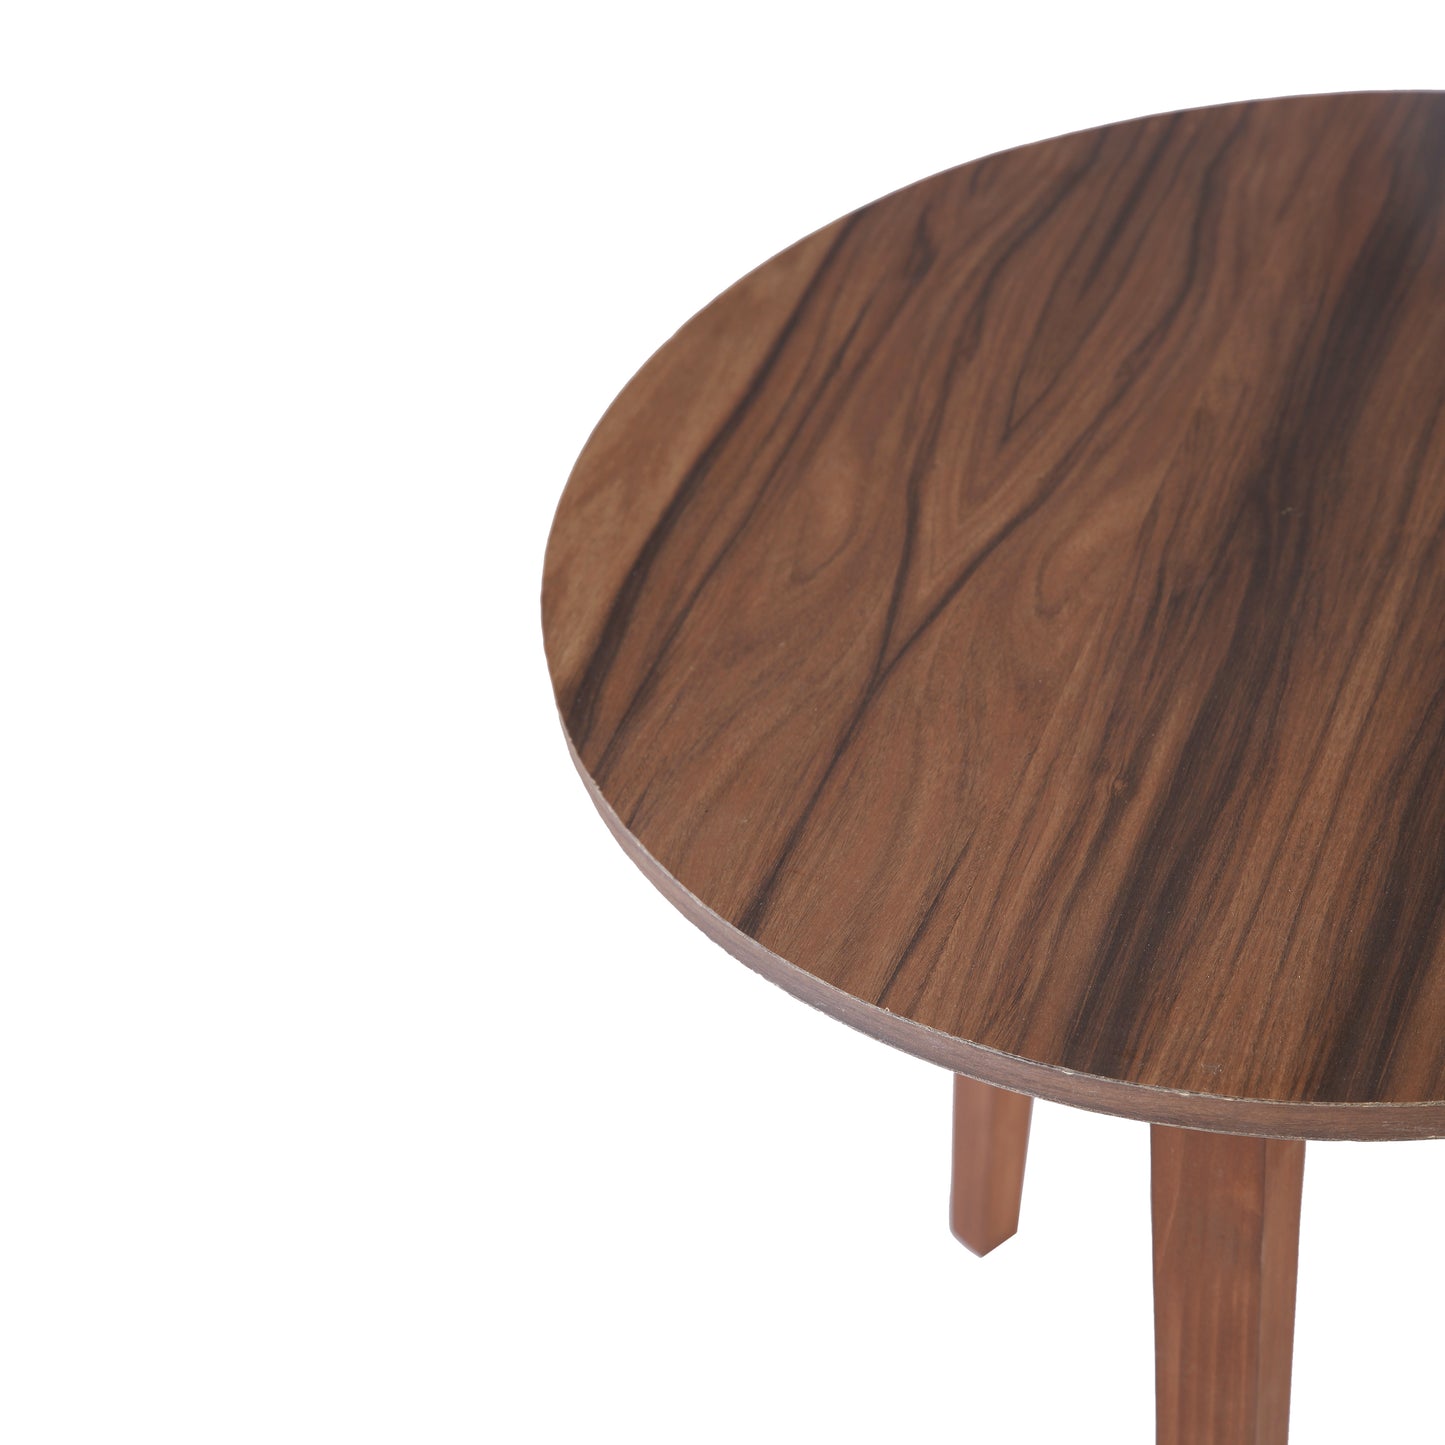 A Tiny Mistake Walnut Matt Finish Wooden Nesting Tables (Set of 2), Living Room Decor